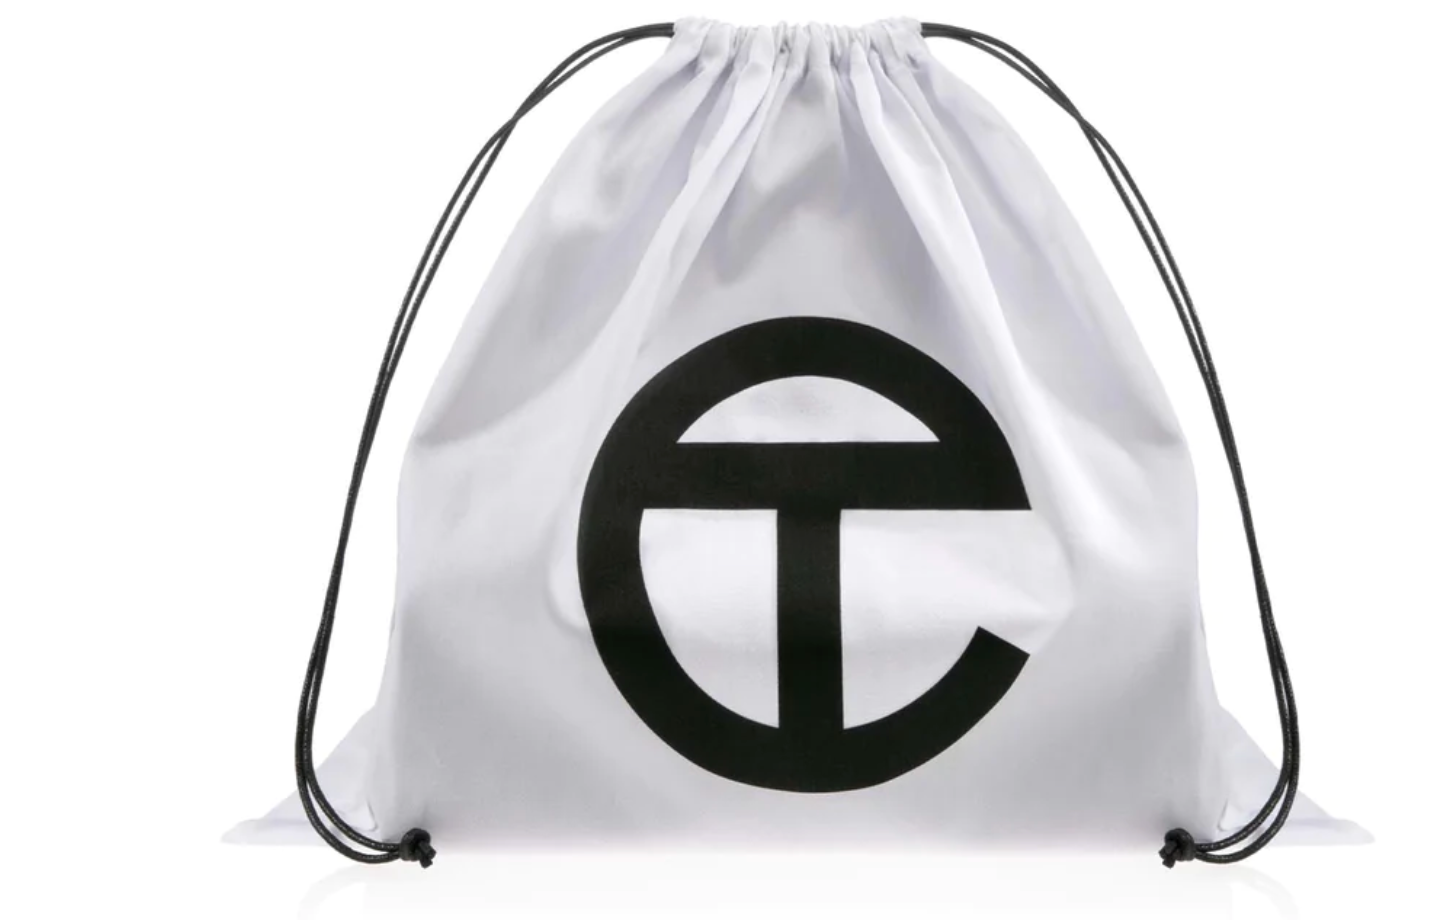 Telfar Shopping Bag Medium Tan